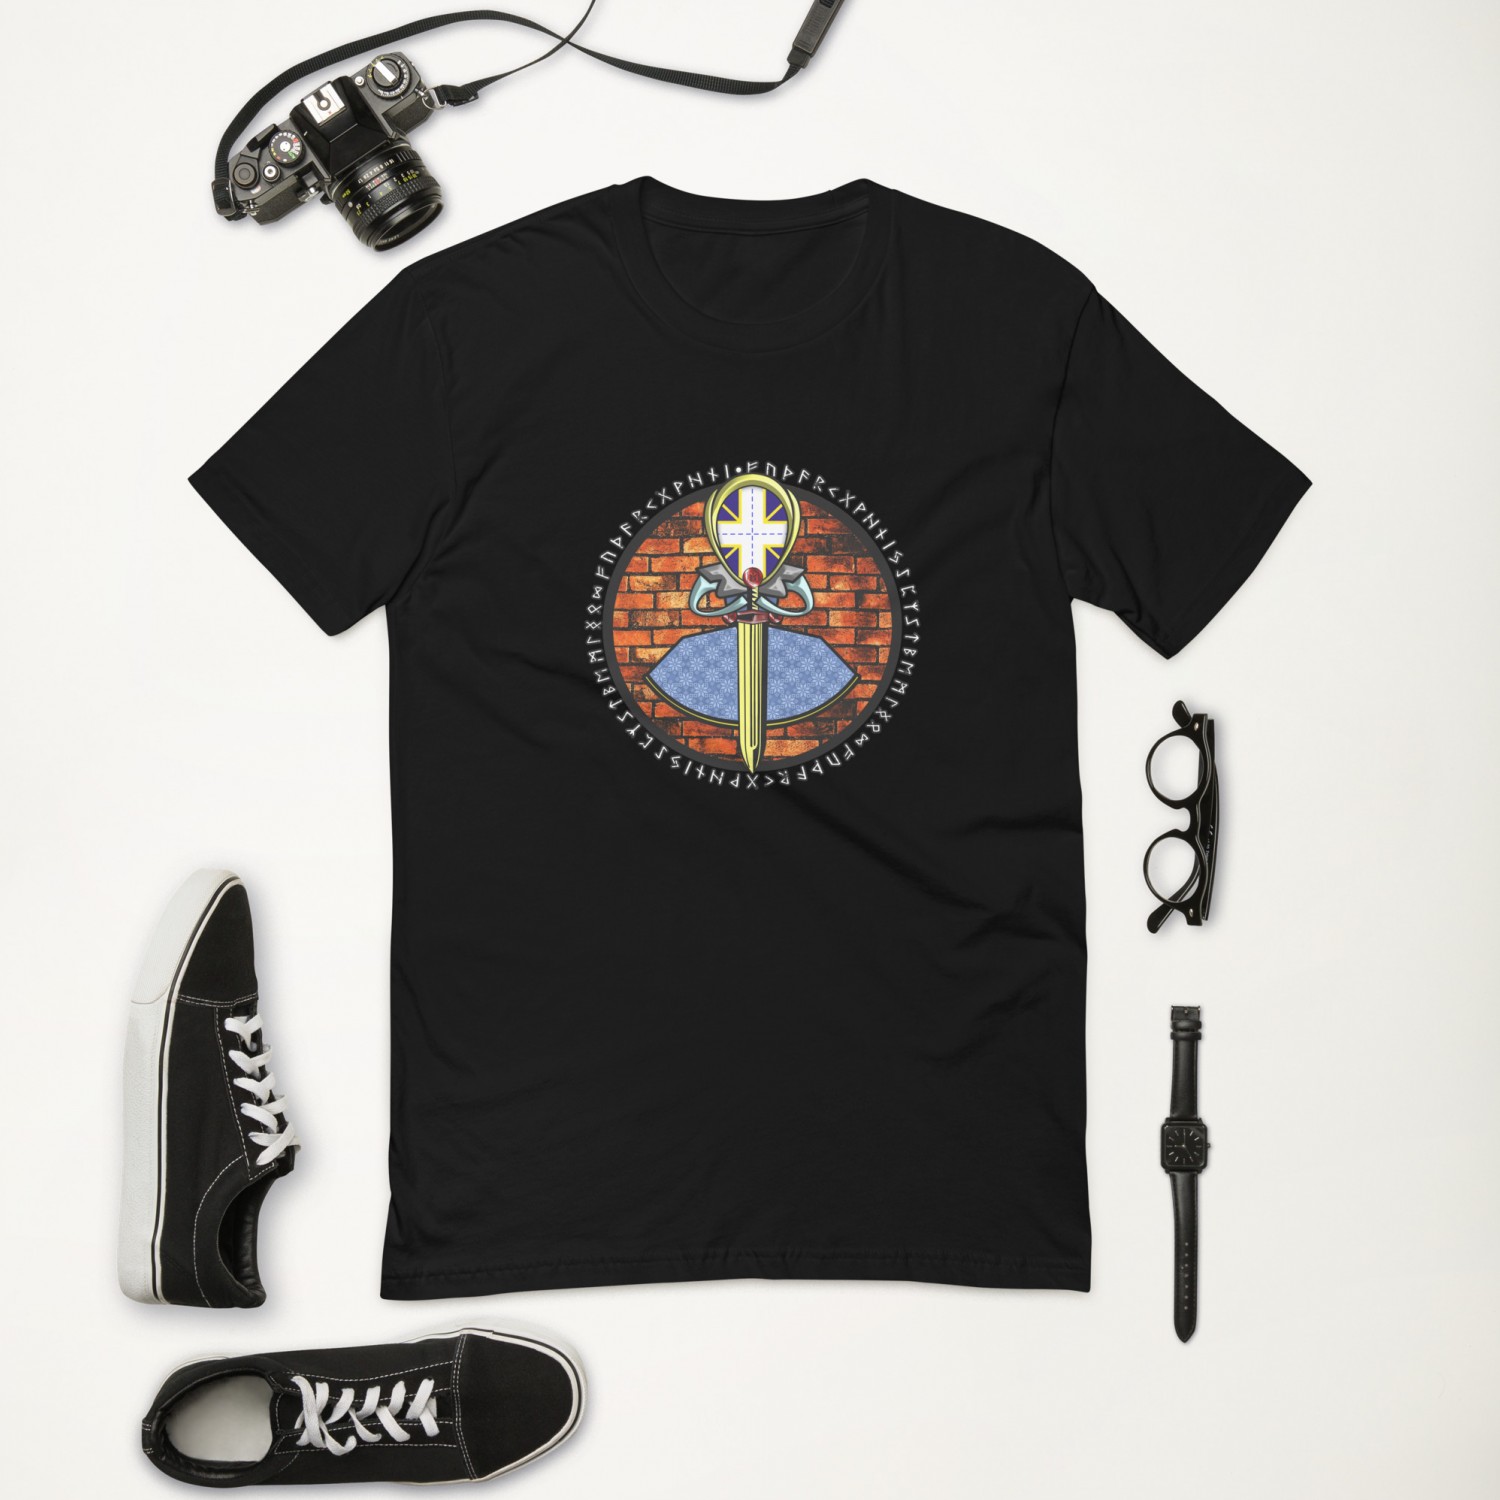 T-shirt "Sword of Damocles"